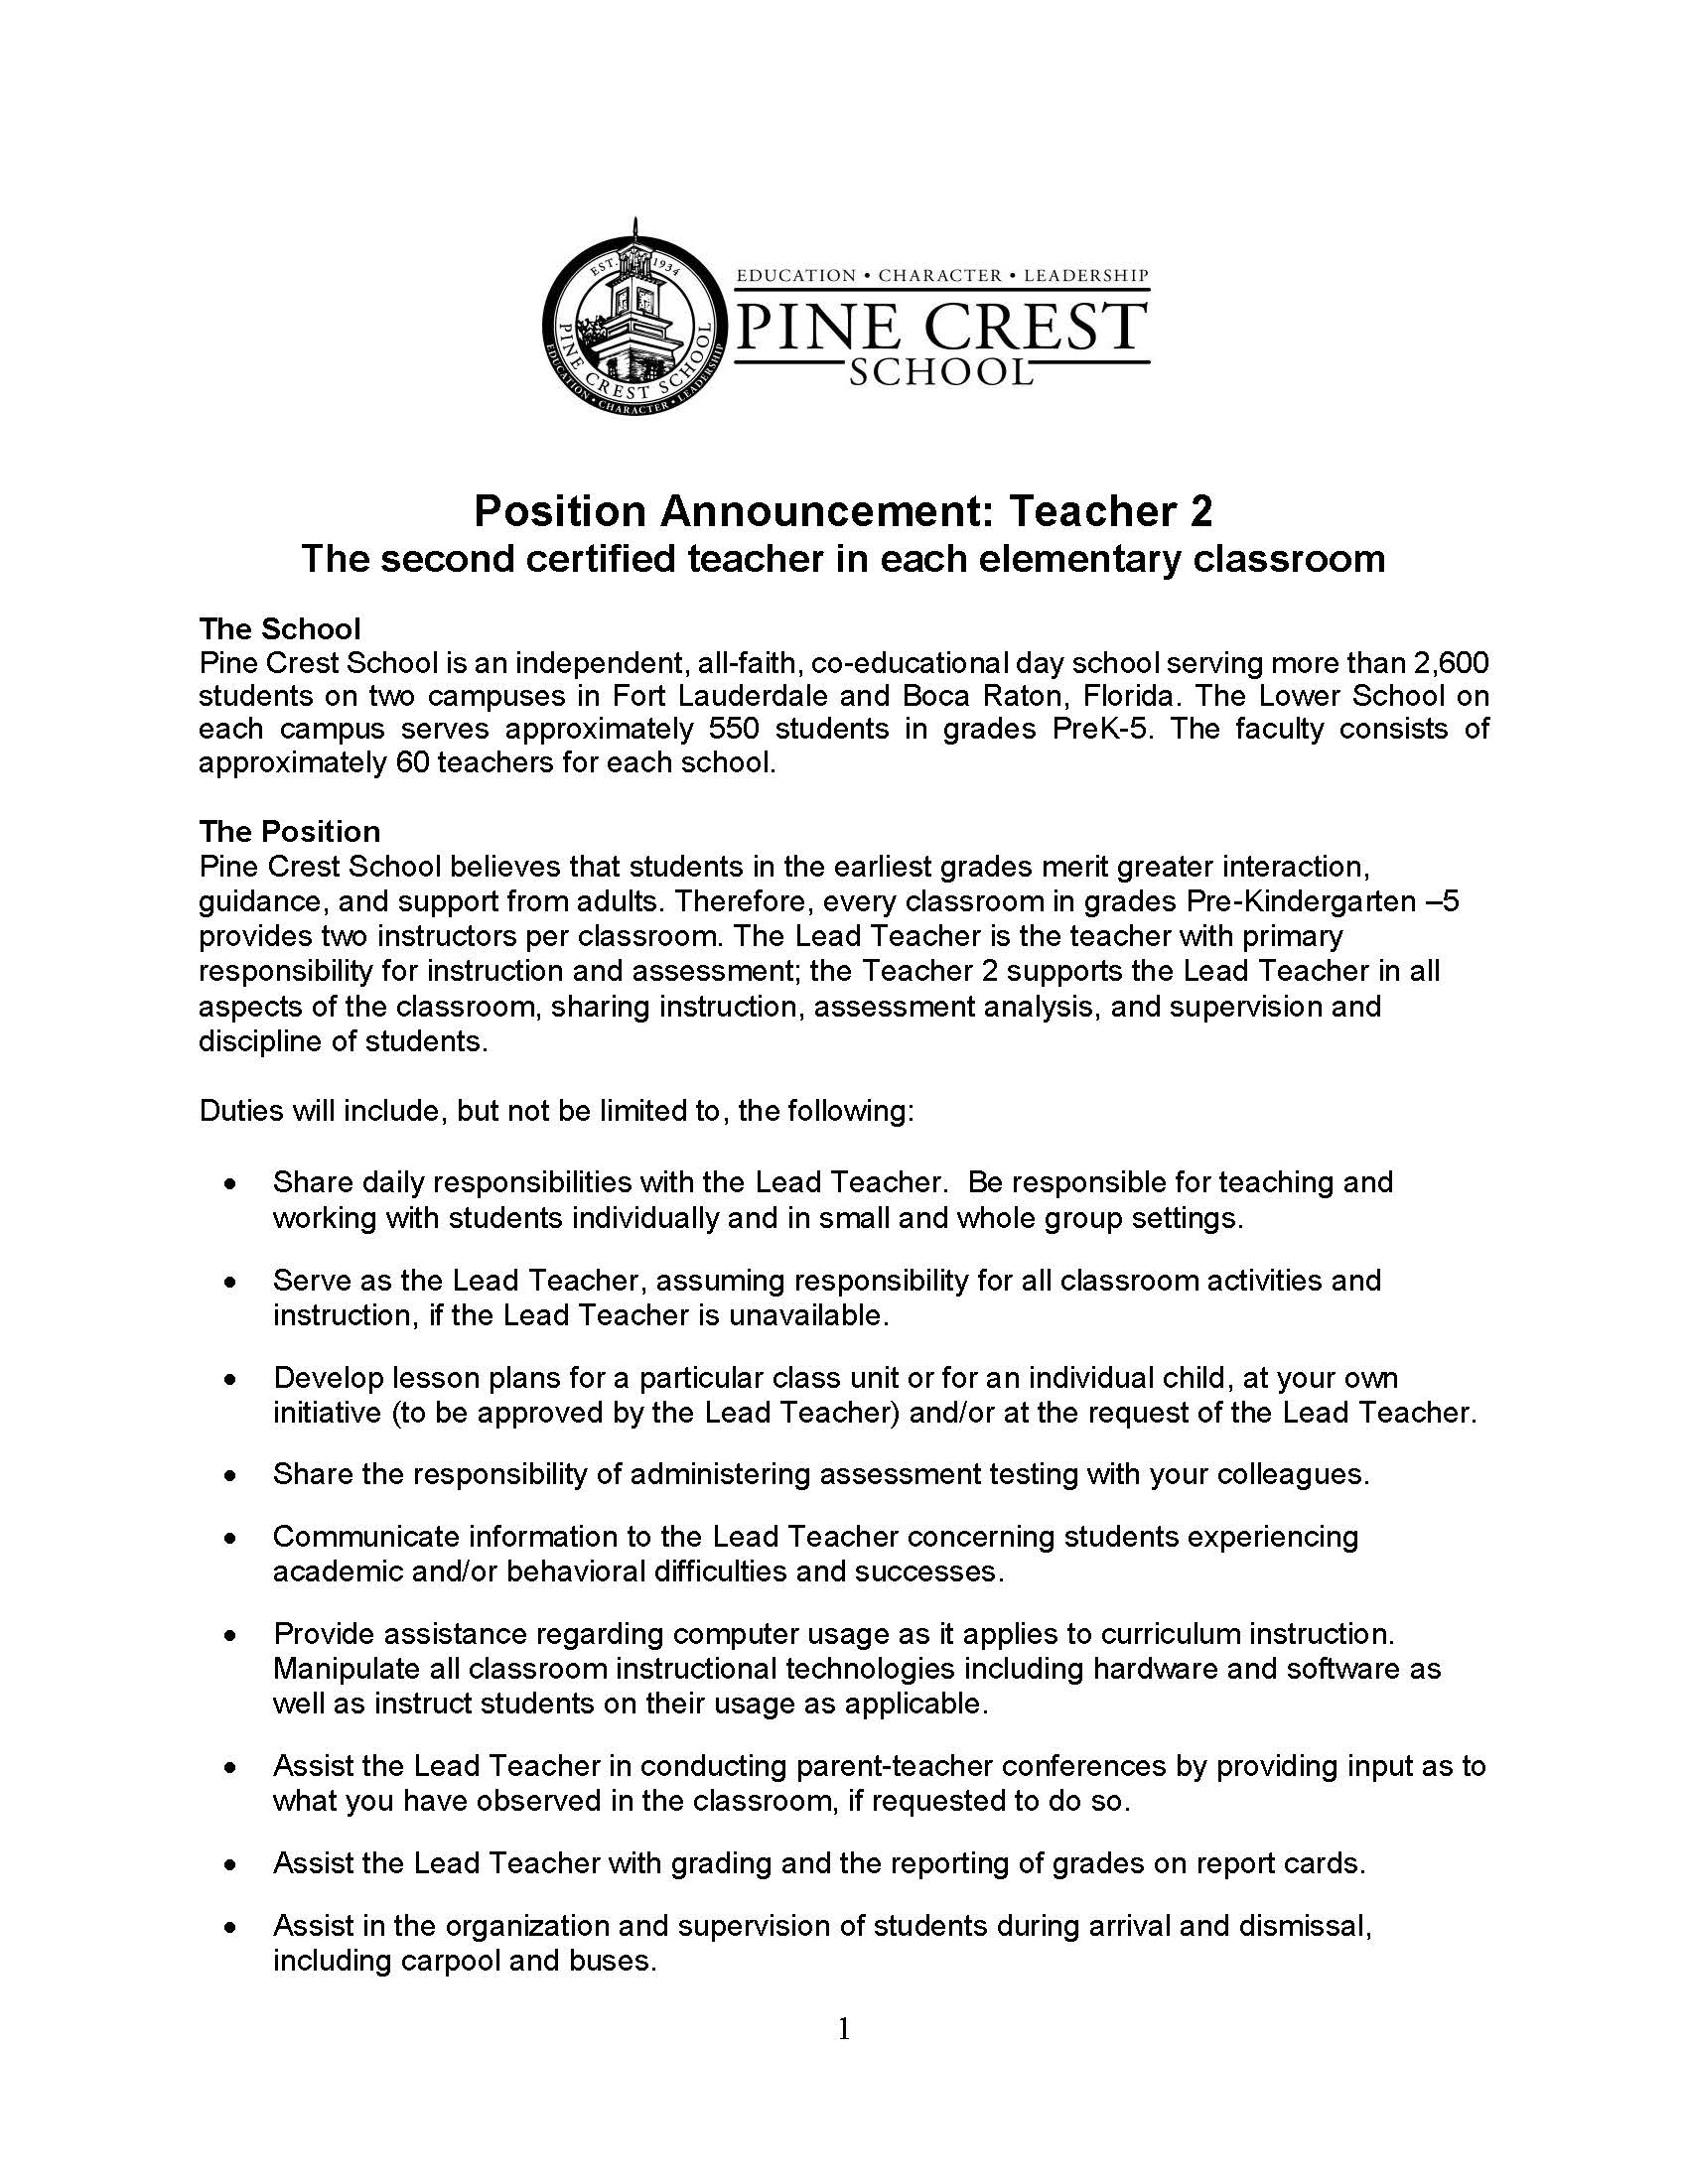 Pine Crest School - Position Announcement: Teacher 2